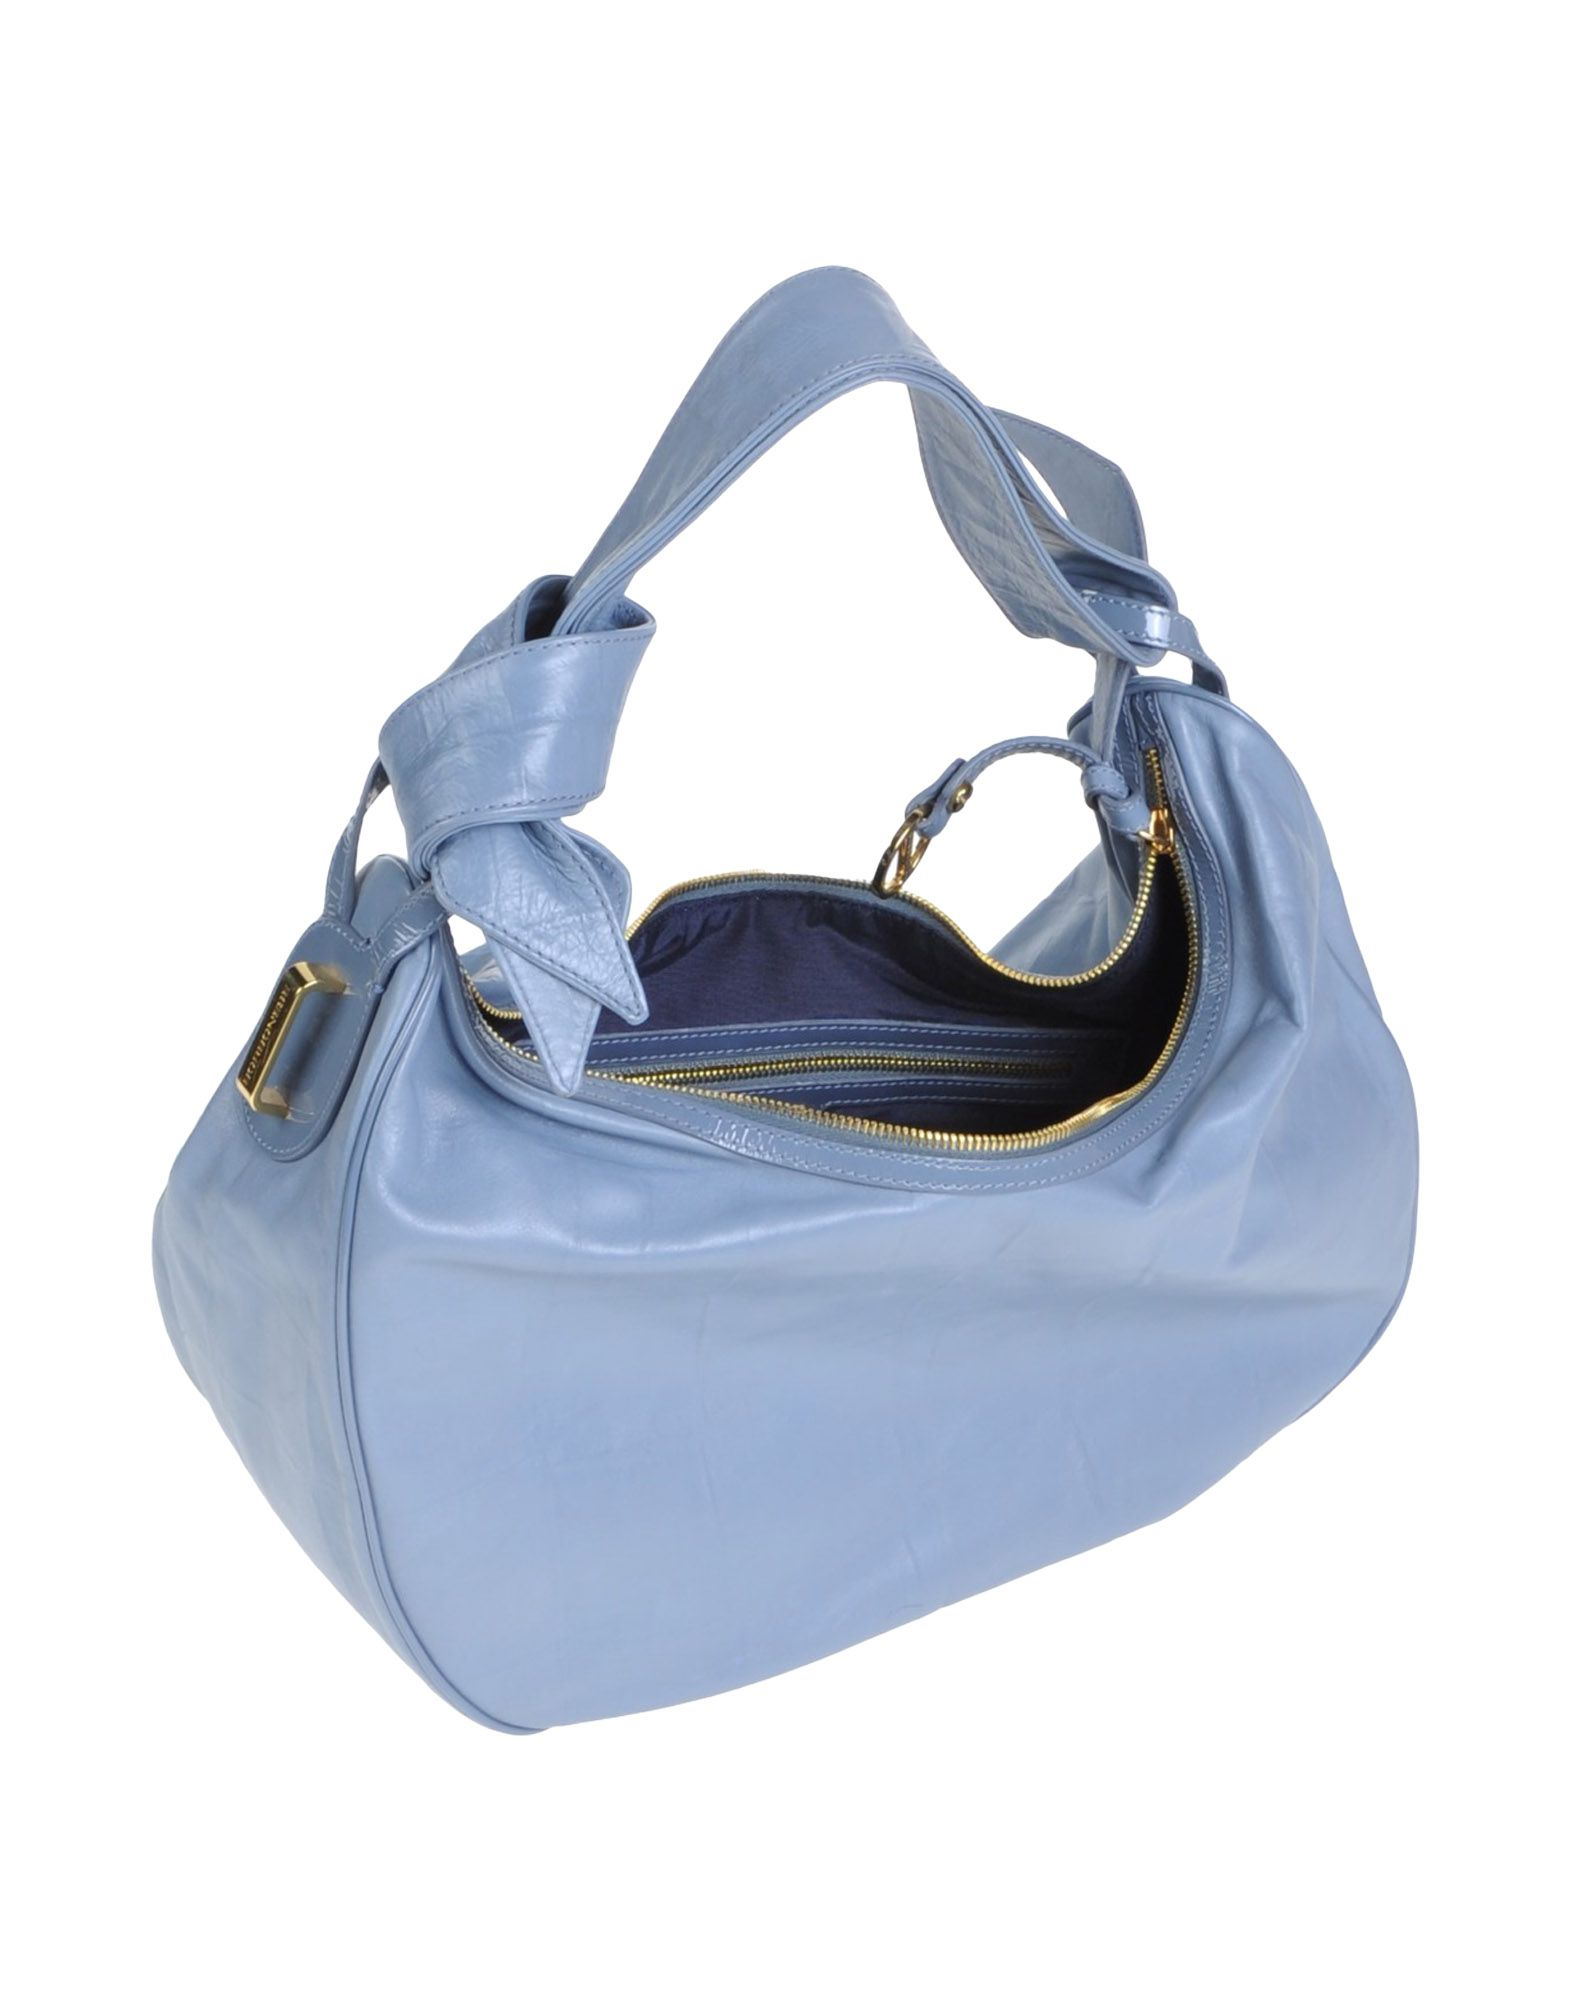 Lyst - Borbonese Handbag in Blue